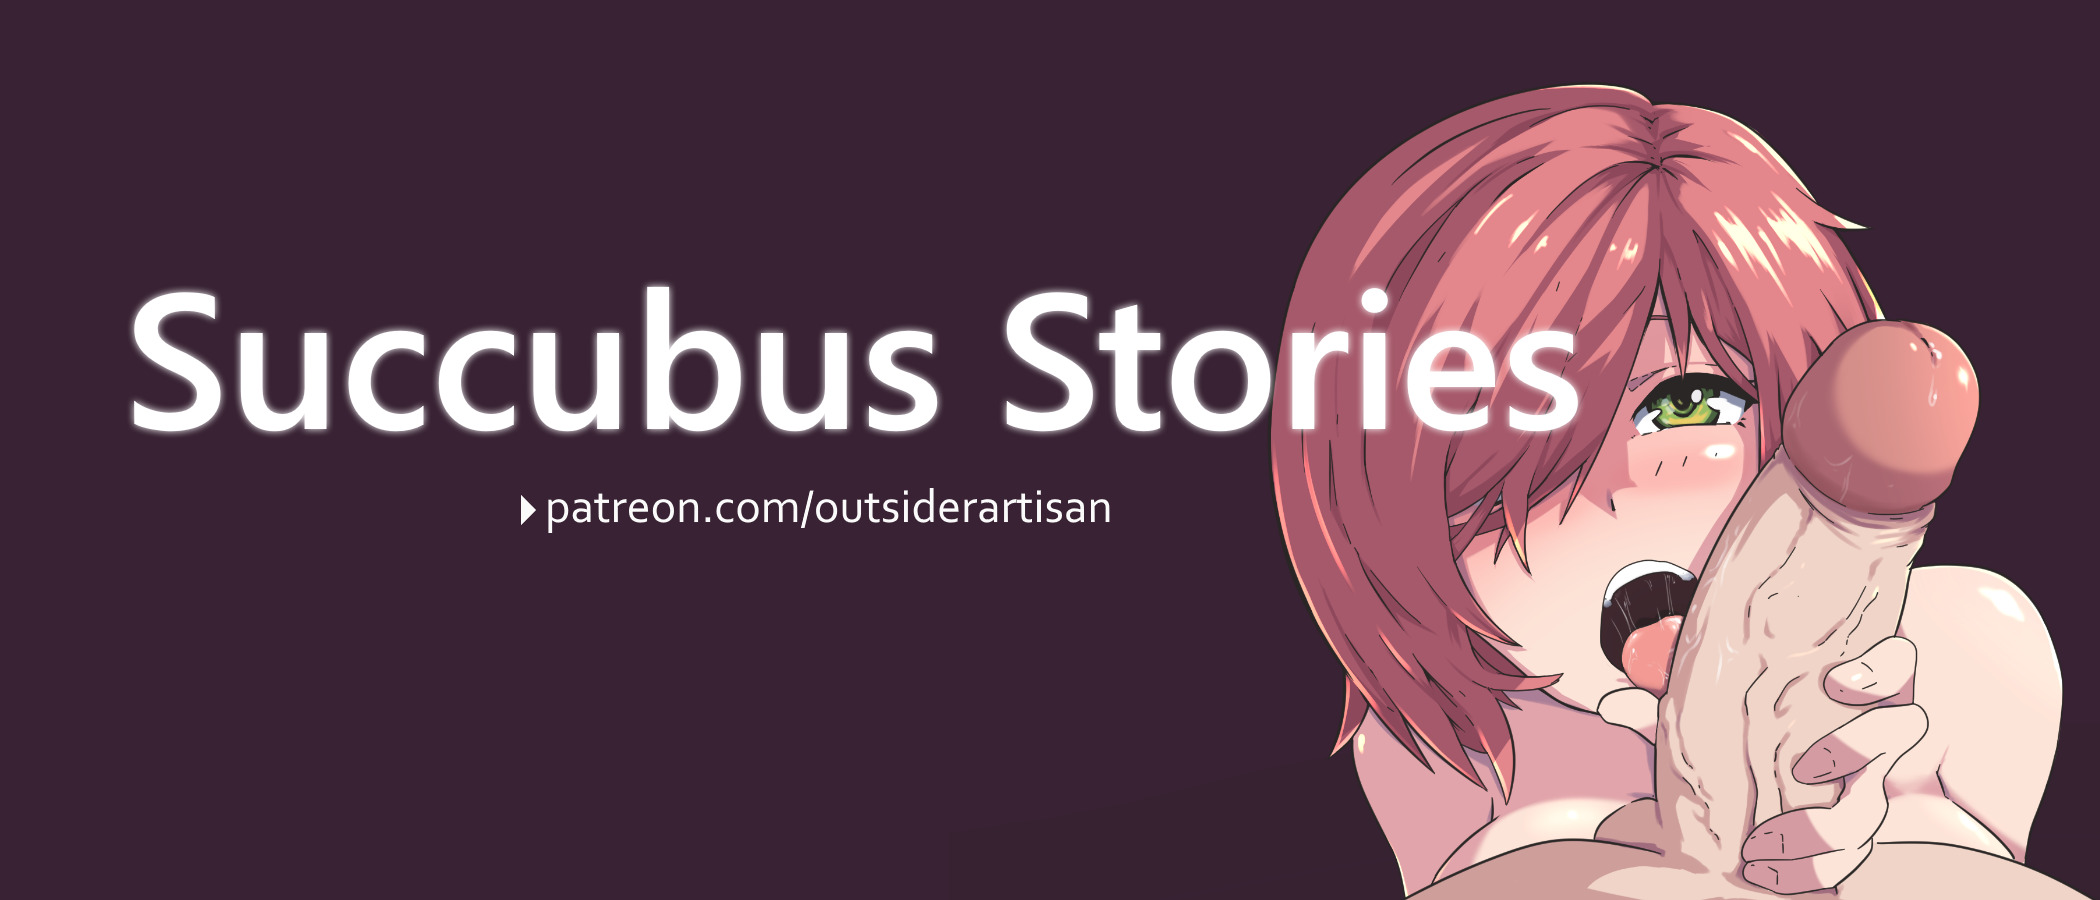 Succubus Stories Promo Image